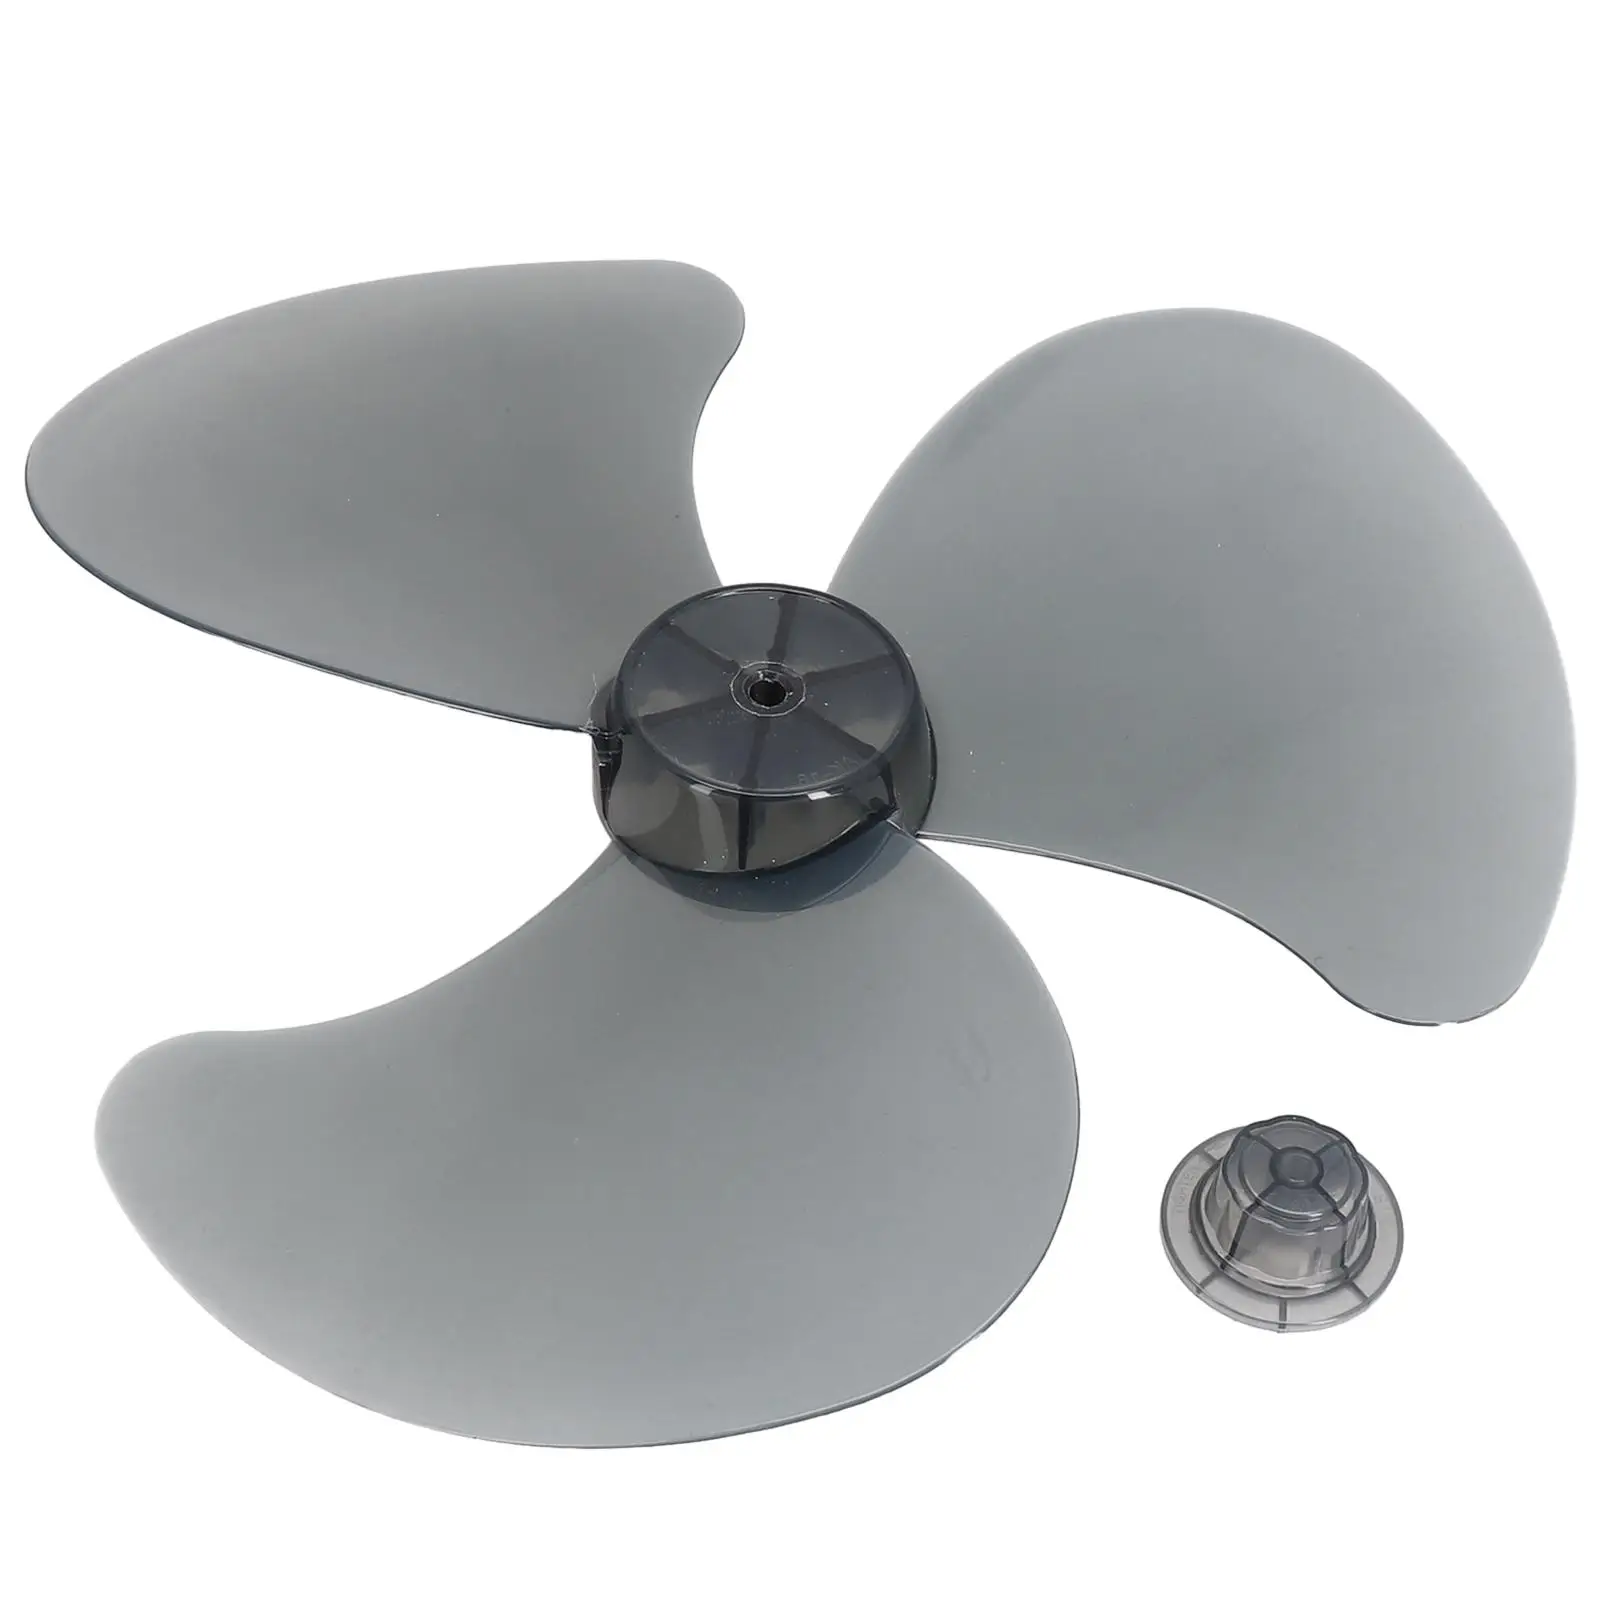 

Plastic Fan Fan Blade General Accessories For Standing Pedestal Fan Household With Nut Cover 3 Leaves Plastic Fan Accessories